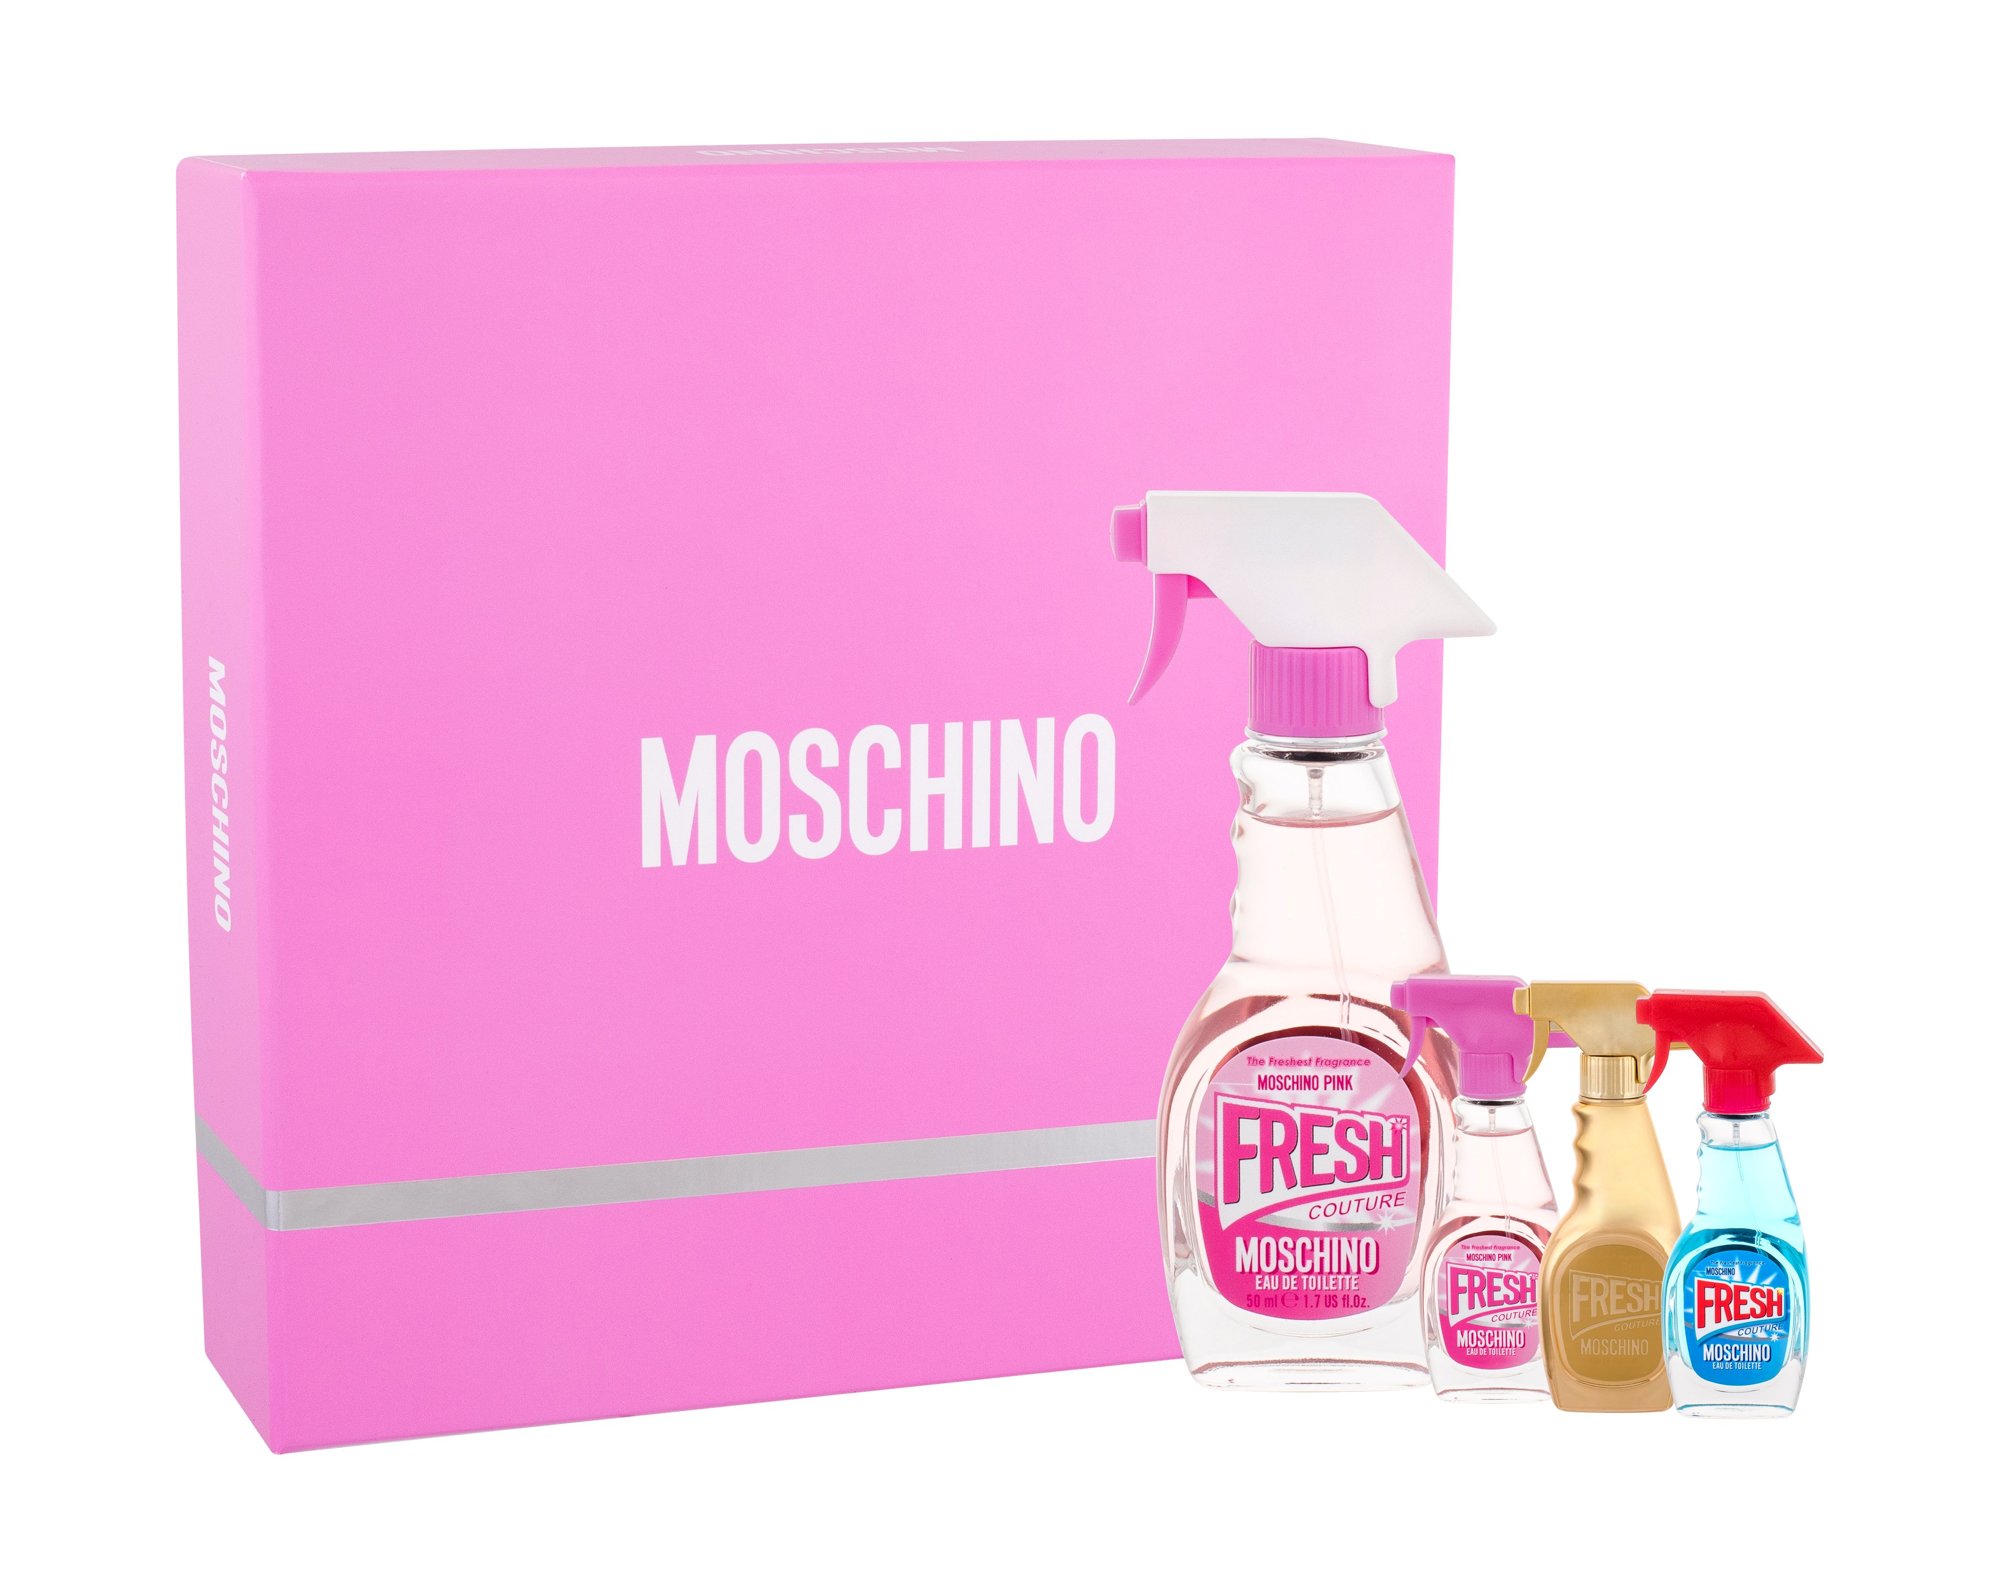 Moschino Fresh Couture Pink, Toaletní voda 50 ml+ Toaletní voda 5 ml + Toaletní voda Fresh Couture 5 ml + parfumovaná voda Fresh Couture Gold 5 ml